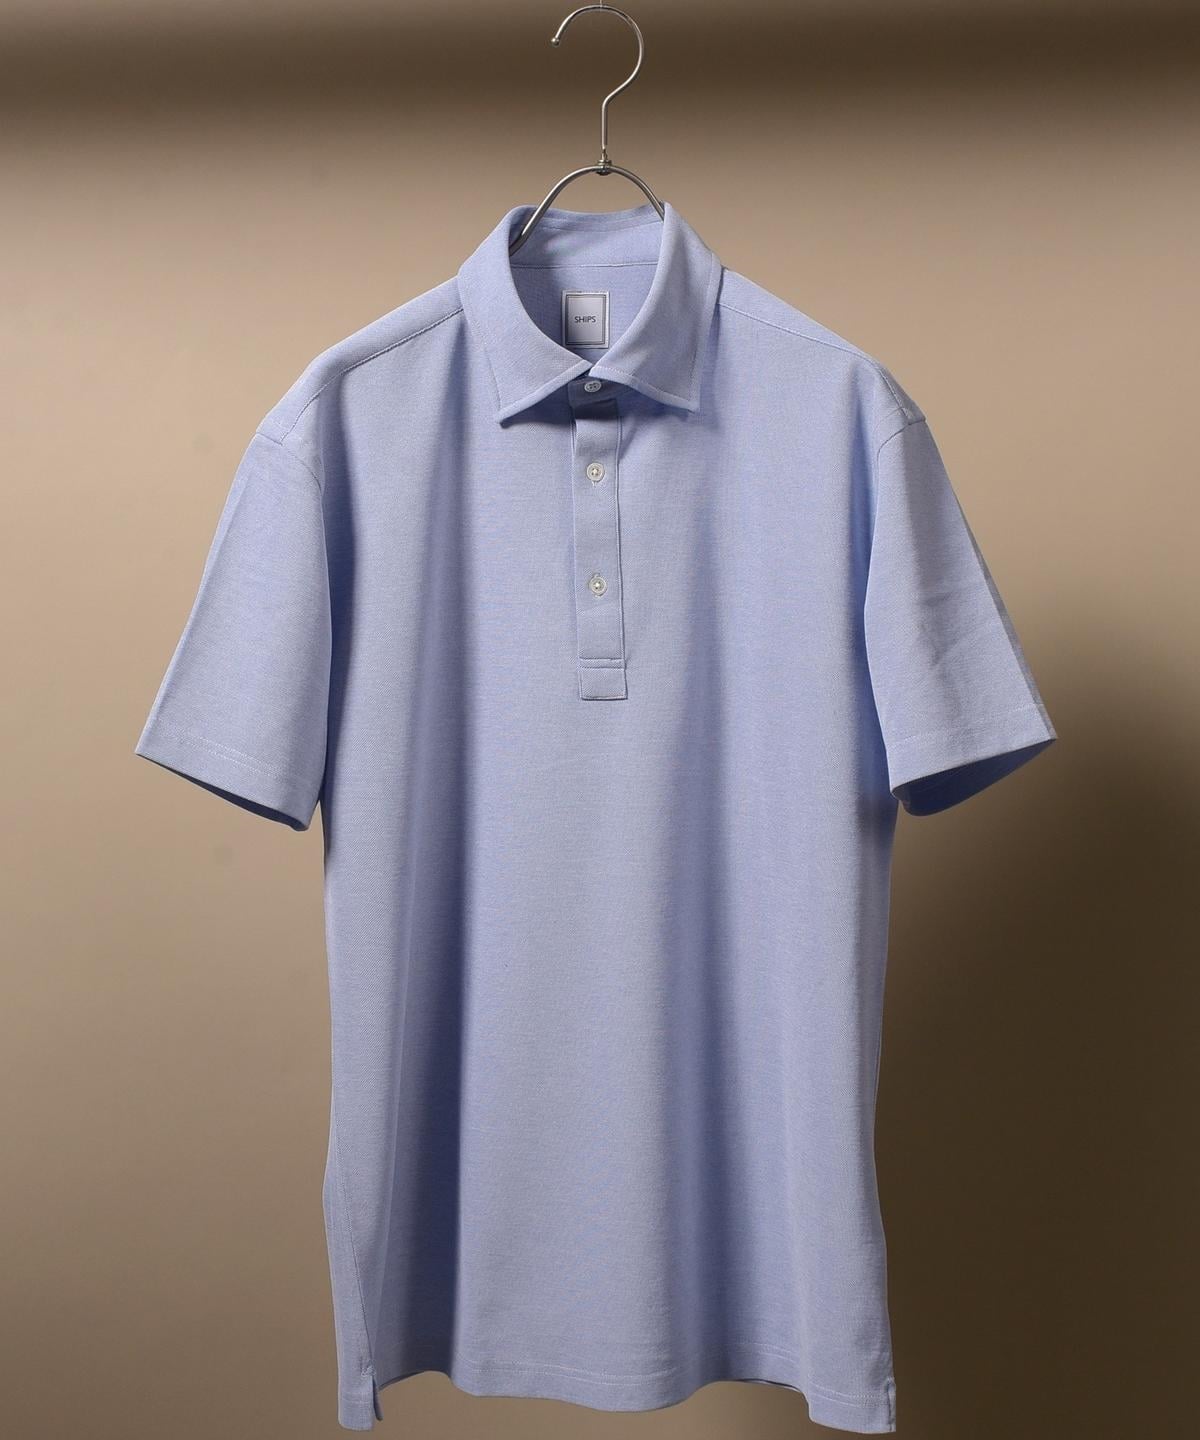 Sd アイス コットン カノコ ポロシャツ Tシャツ カットソー Ships 公式サイト 株式会社シップス